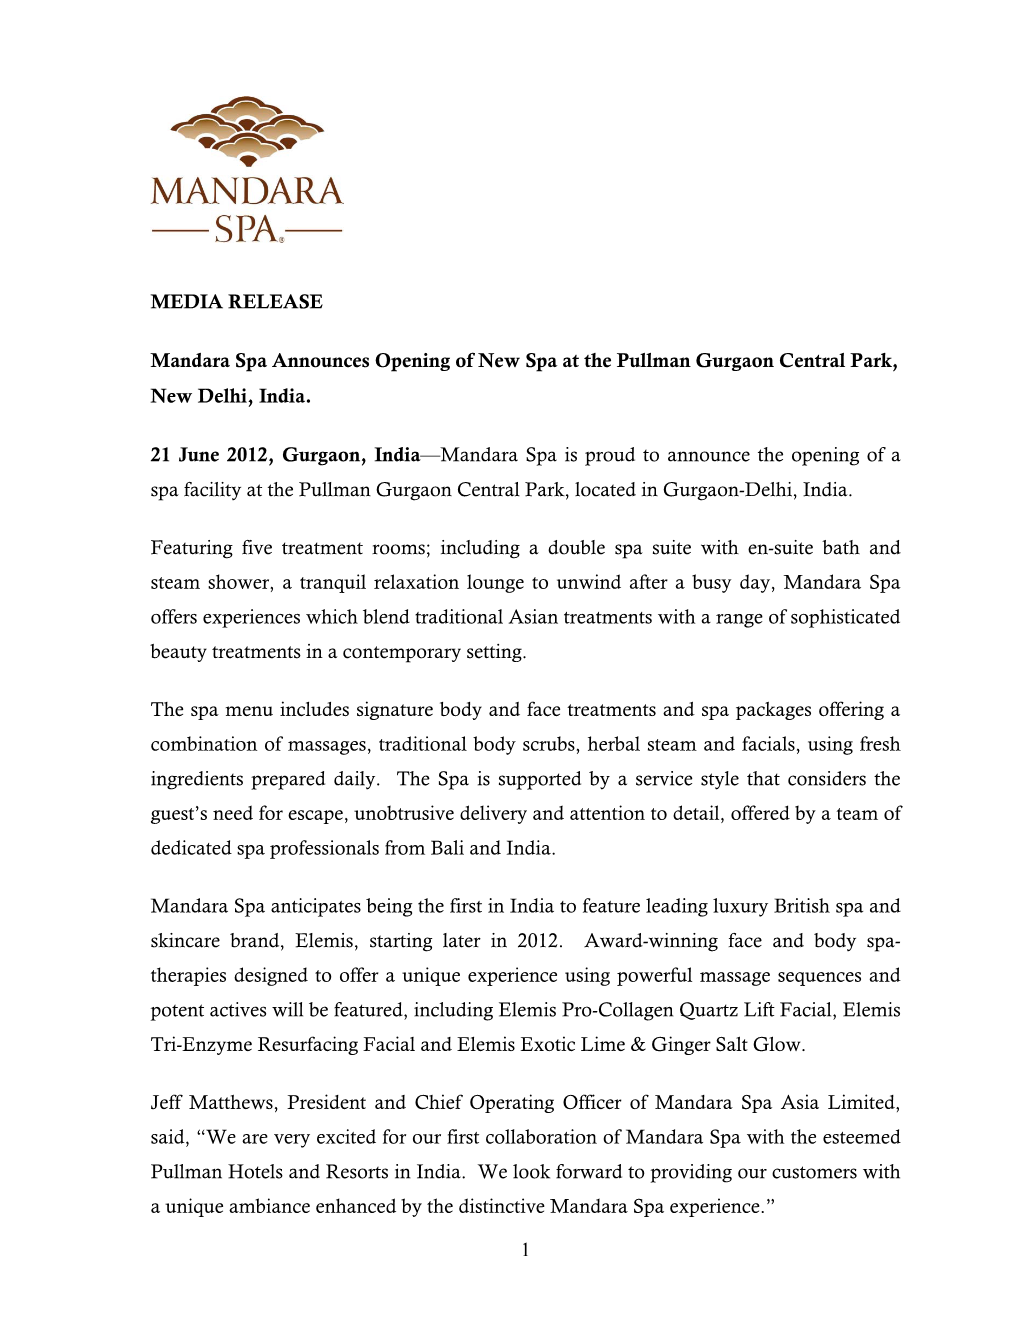 Mandara Spa Announces Opening of New Spa at the Pullman Gurgaon Central Park, New Delhi, India